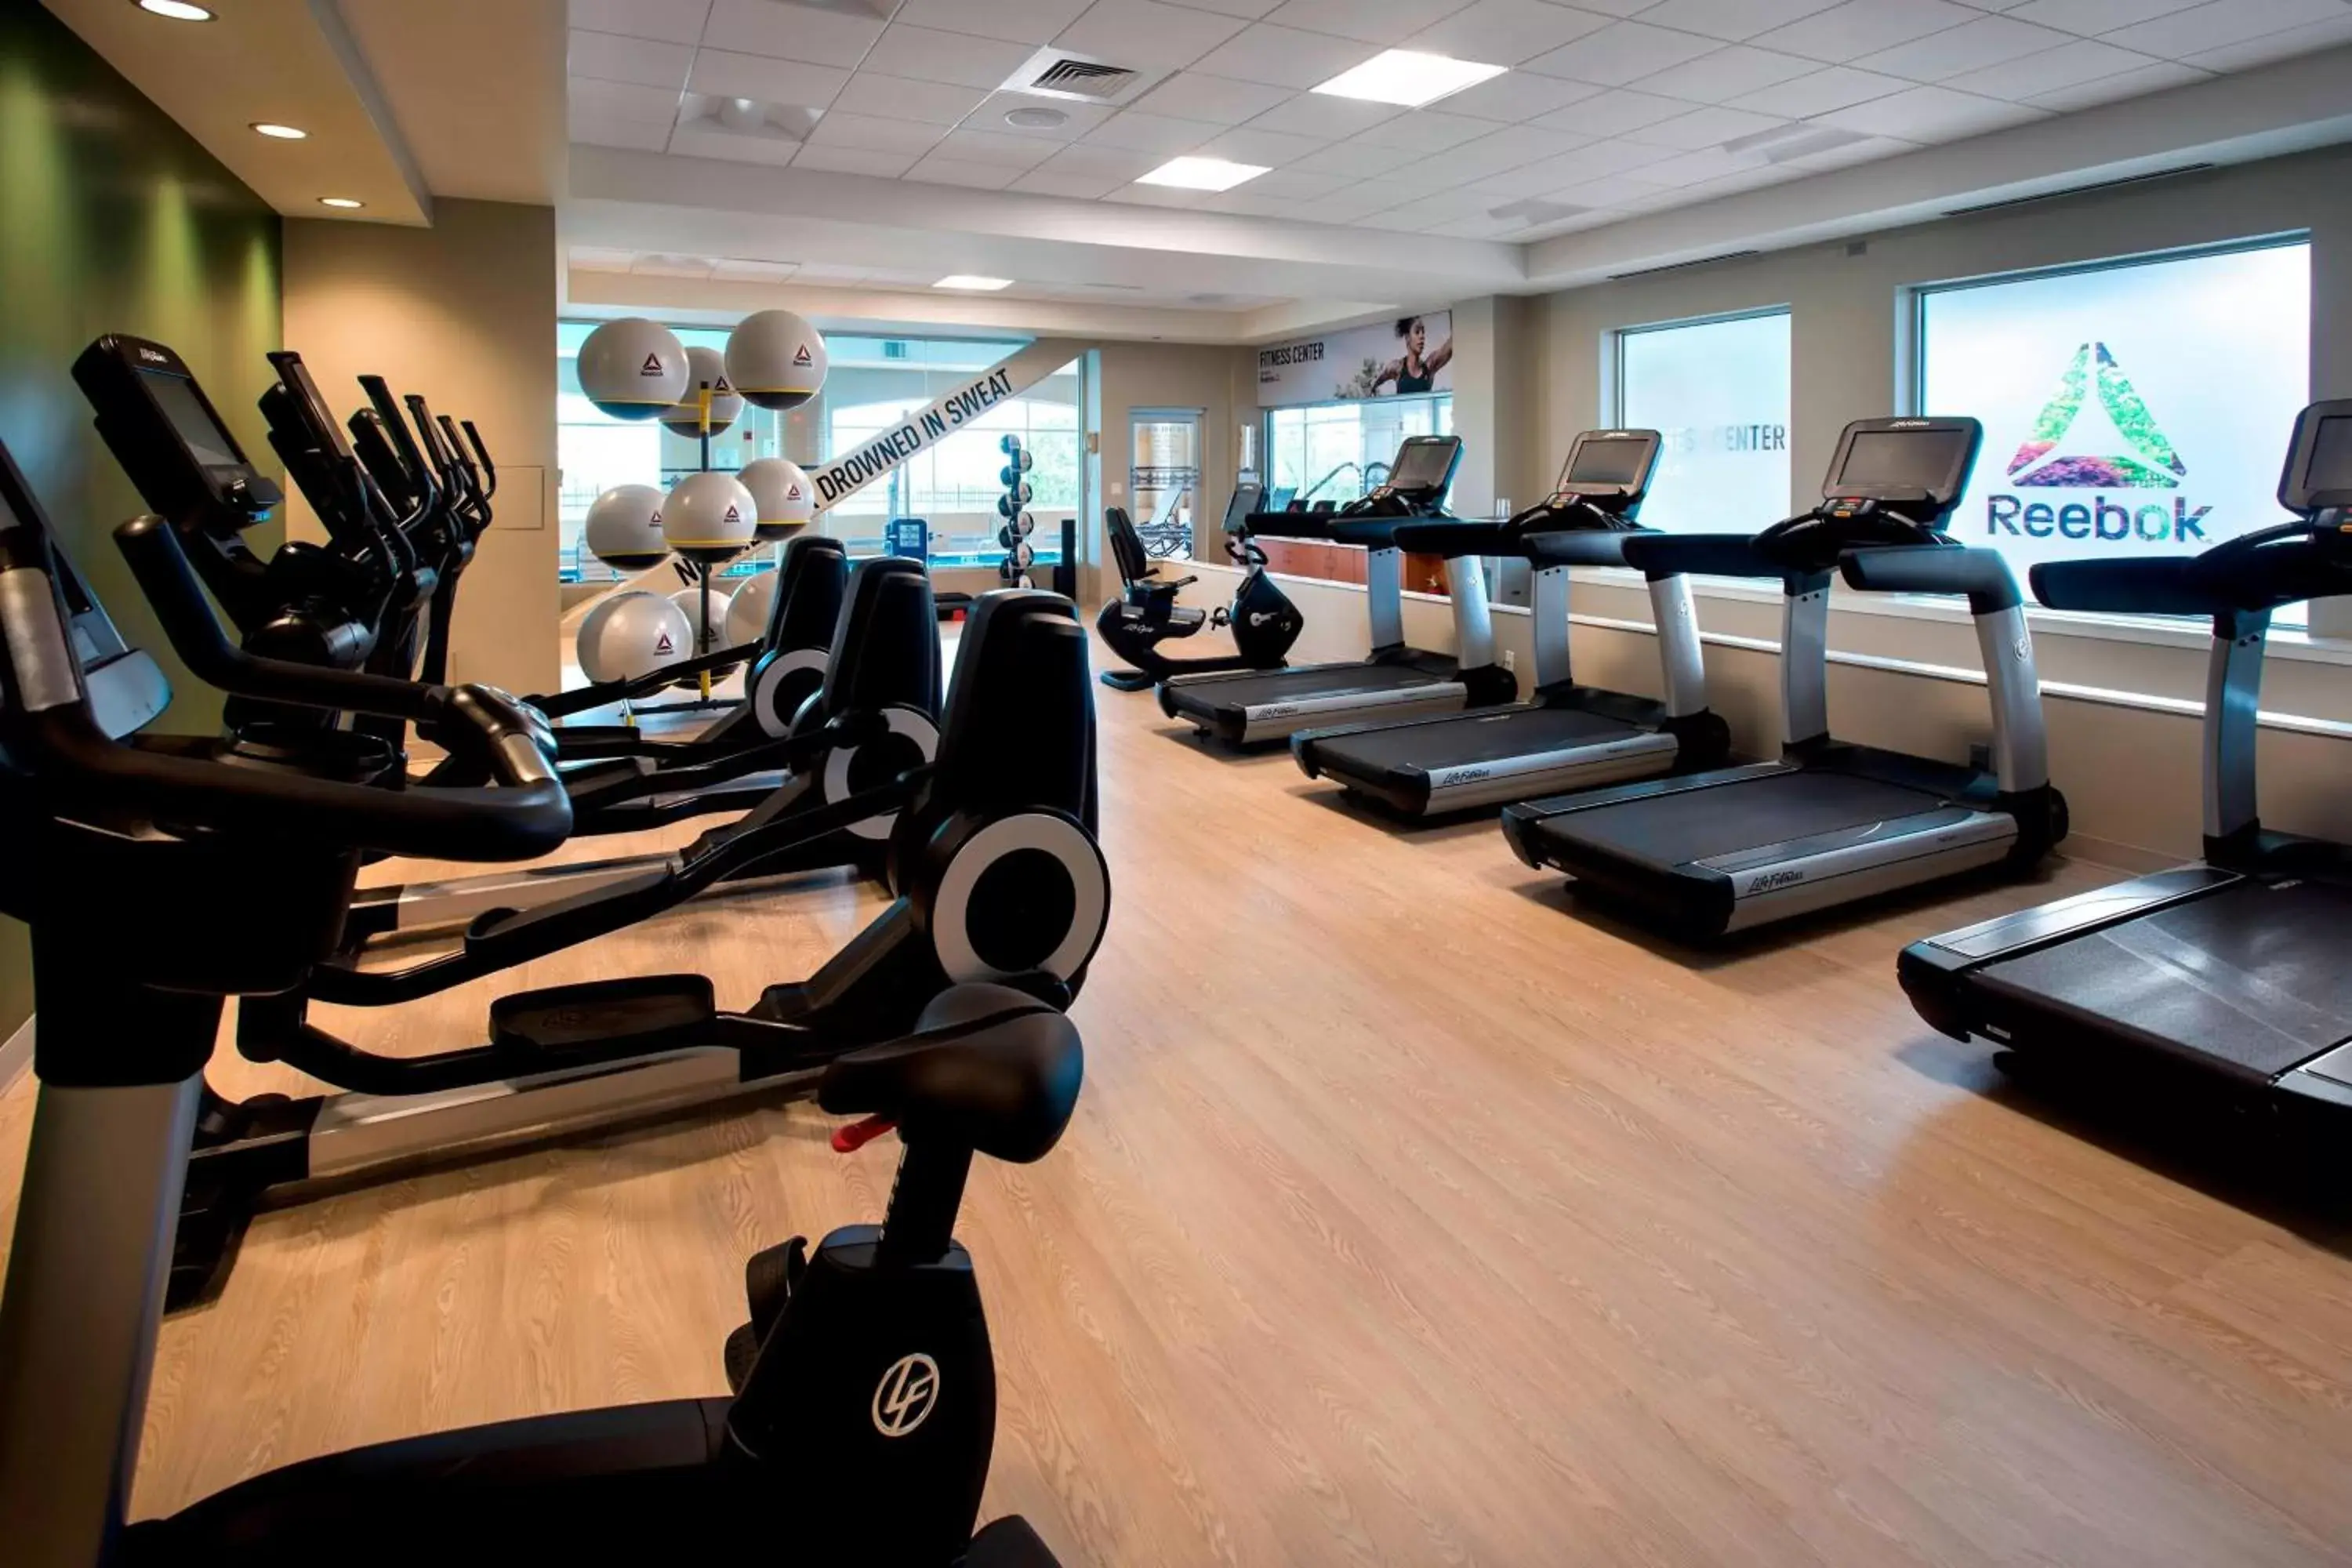 Fitness centre/facilities, Fitness Center/Facilities in Marriott Boston Quincy